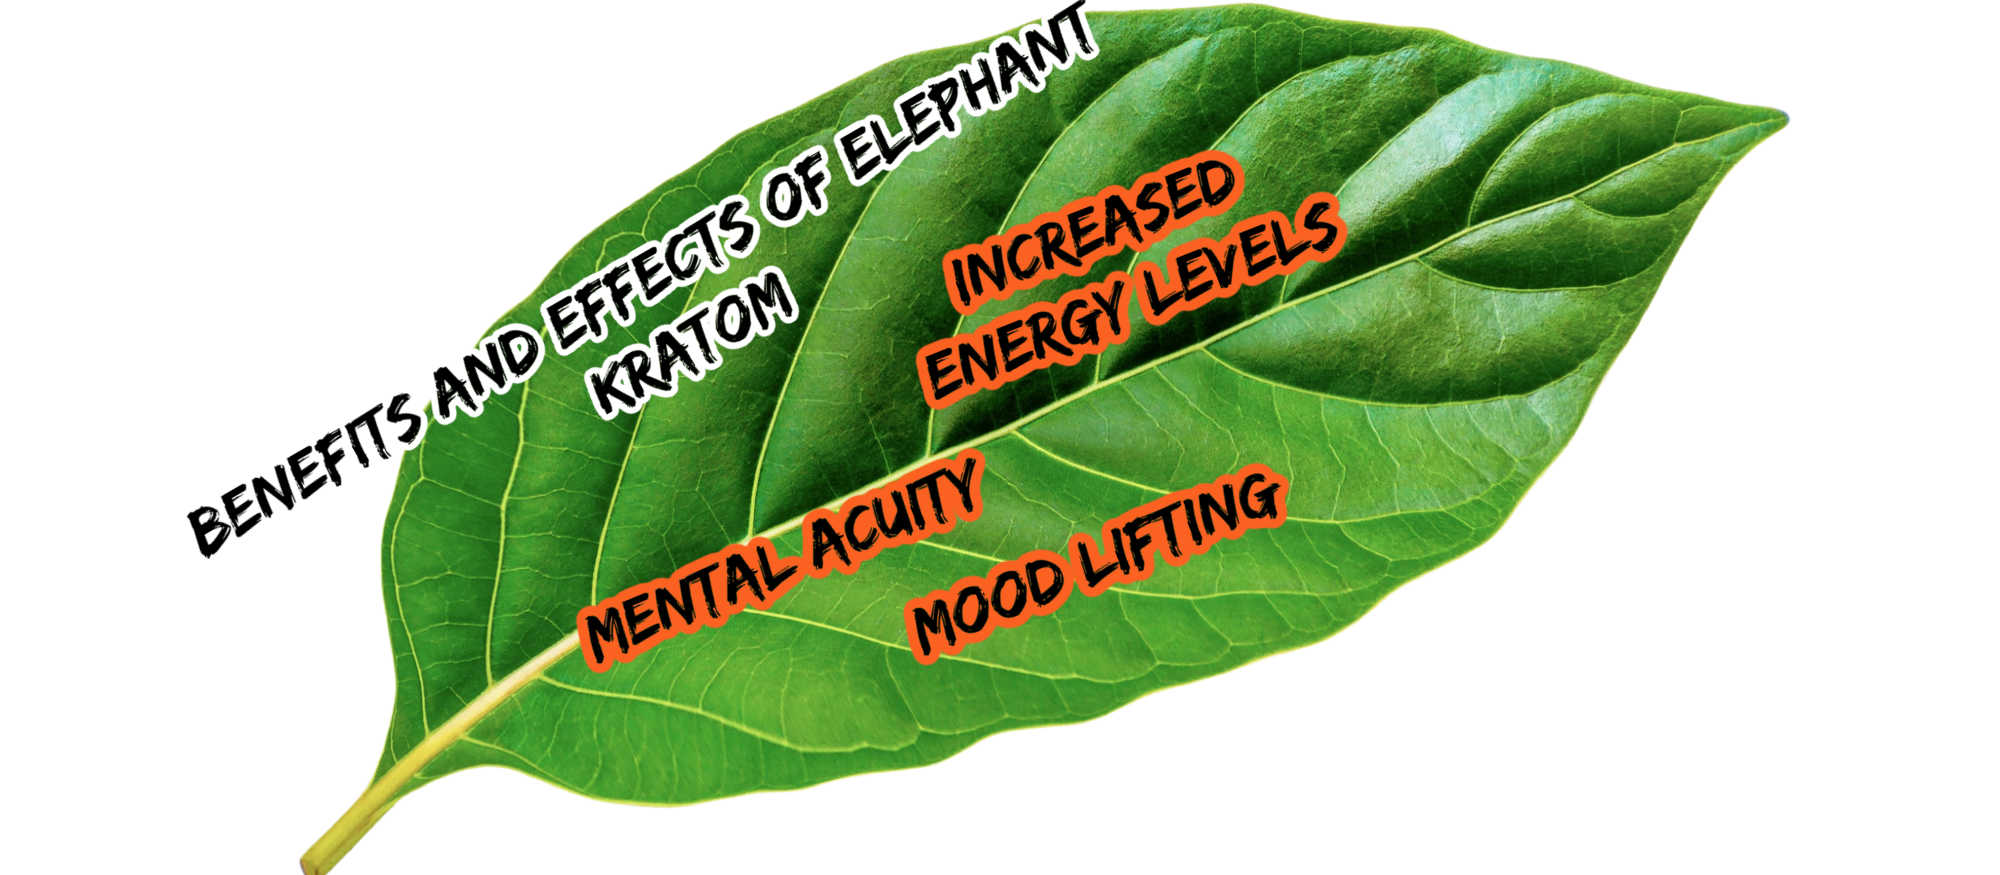 image of elephant kratom benefits and effects